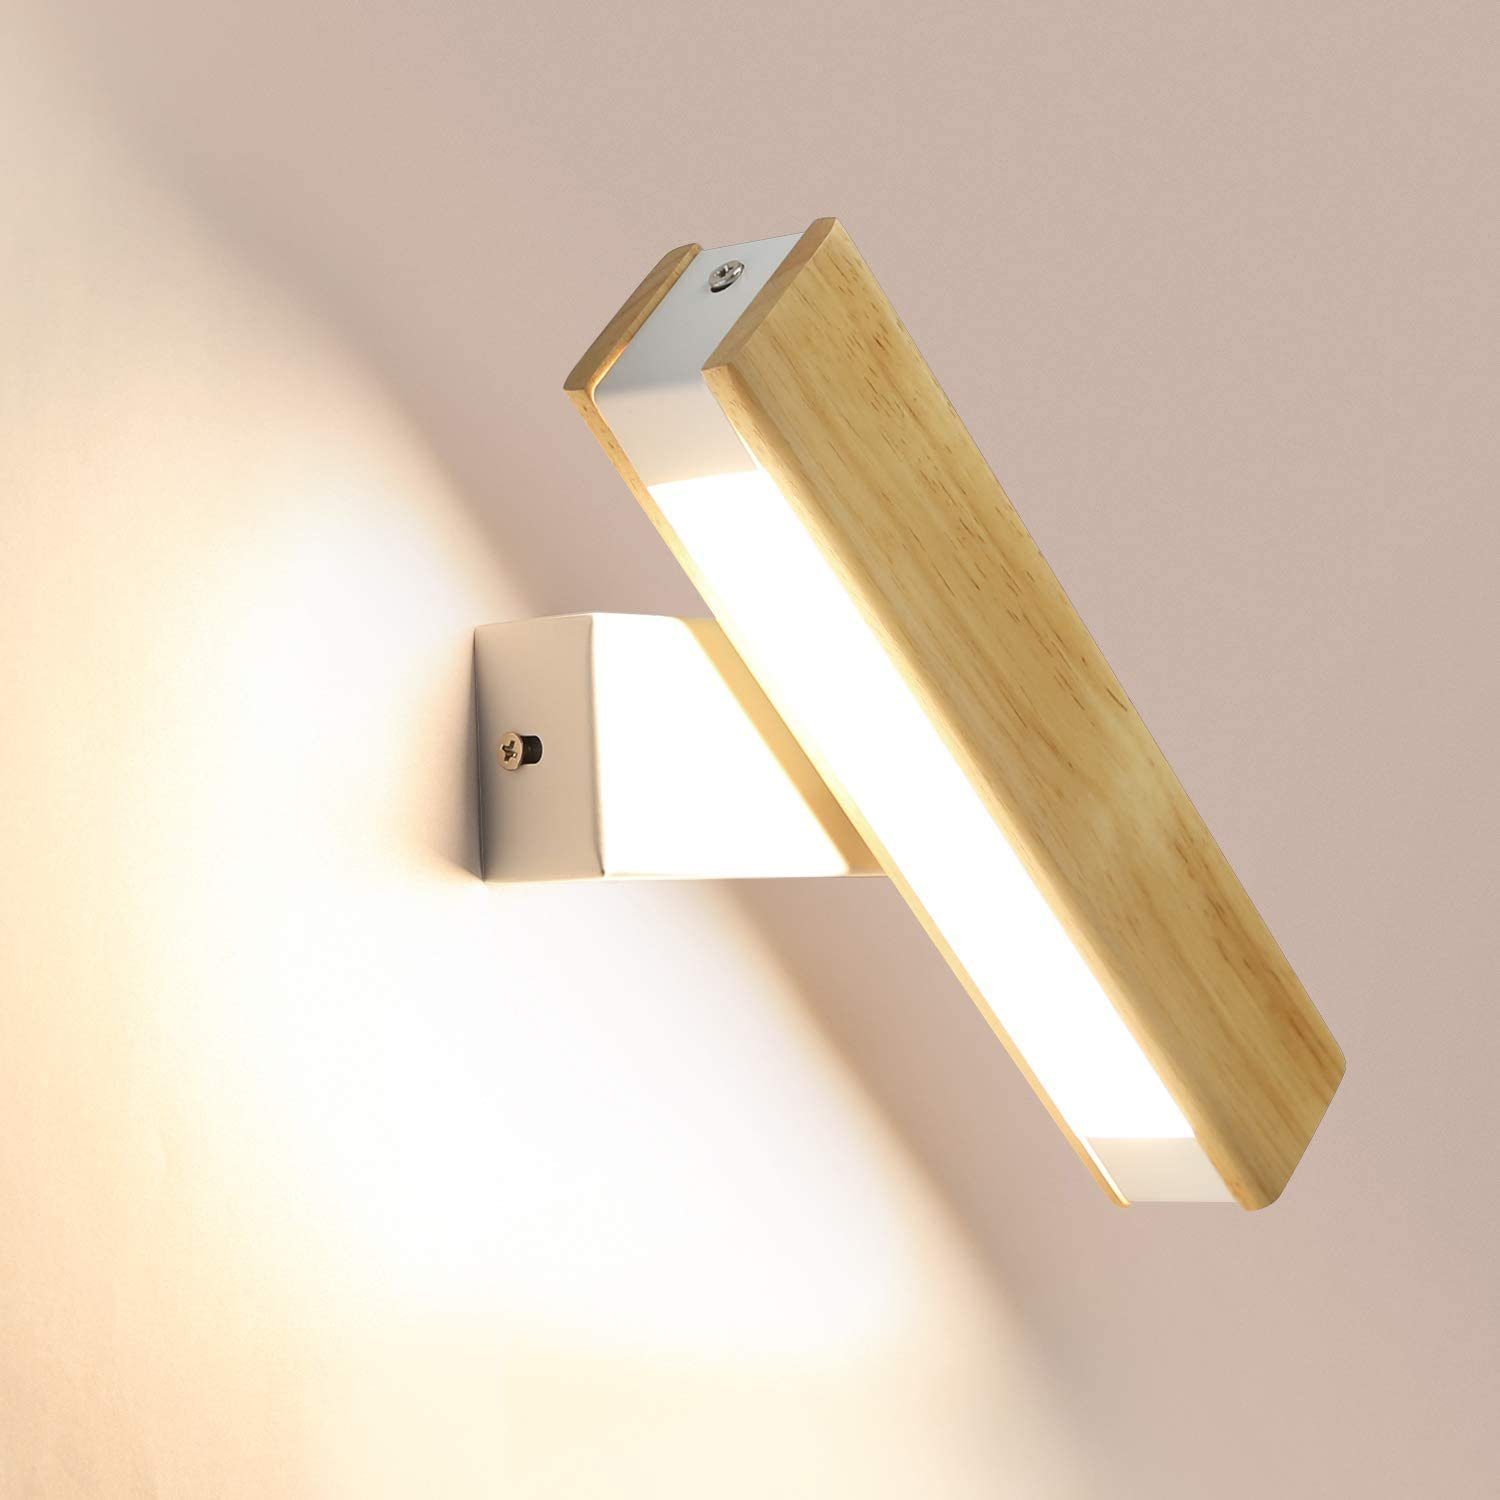 LED Wand Lampe chrom Arbeits Zimmer Spot Flur Strahler Design Leuchte schwenkbar 